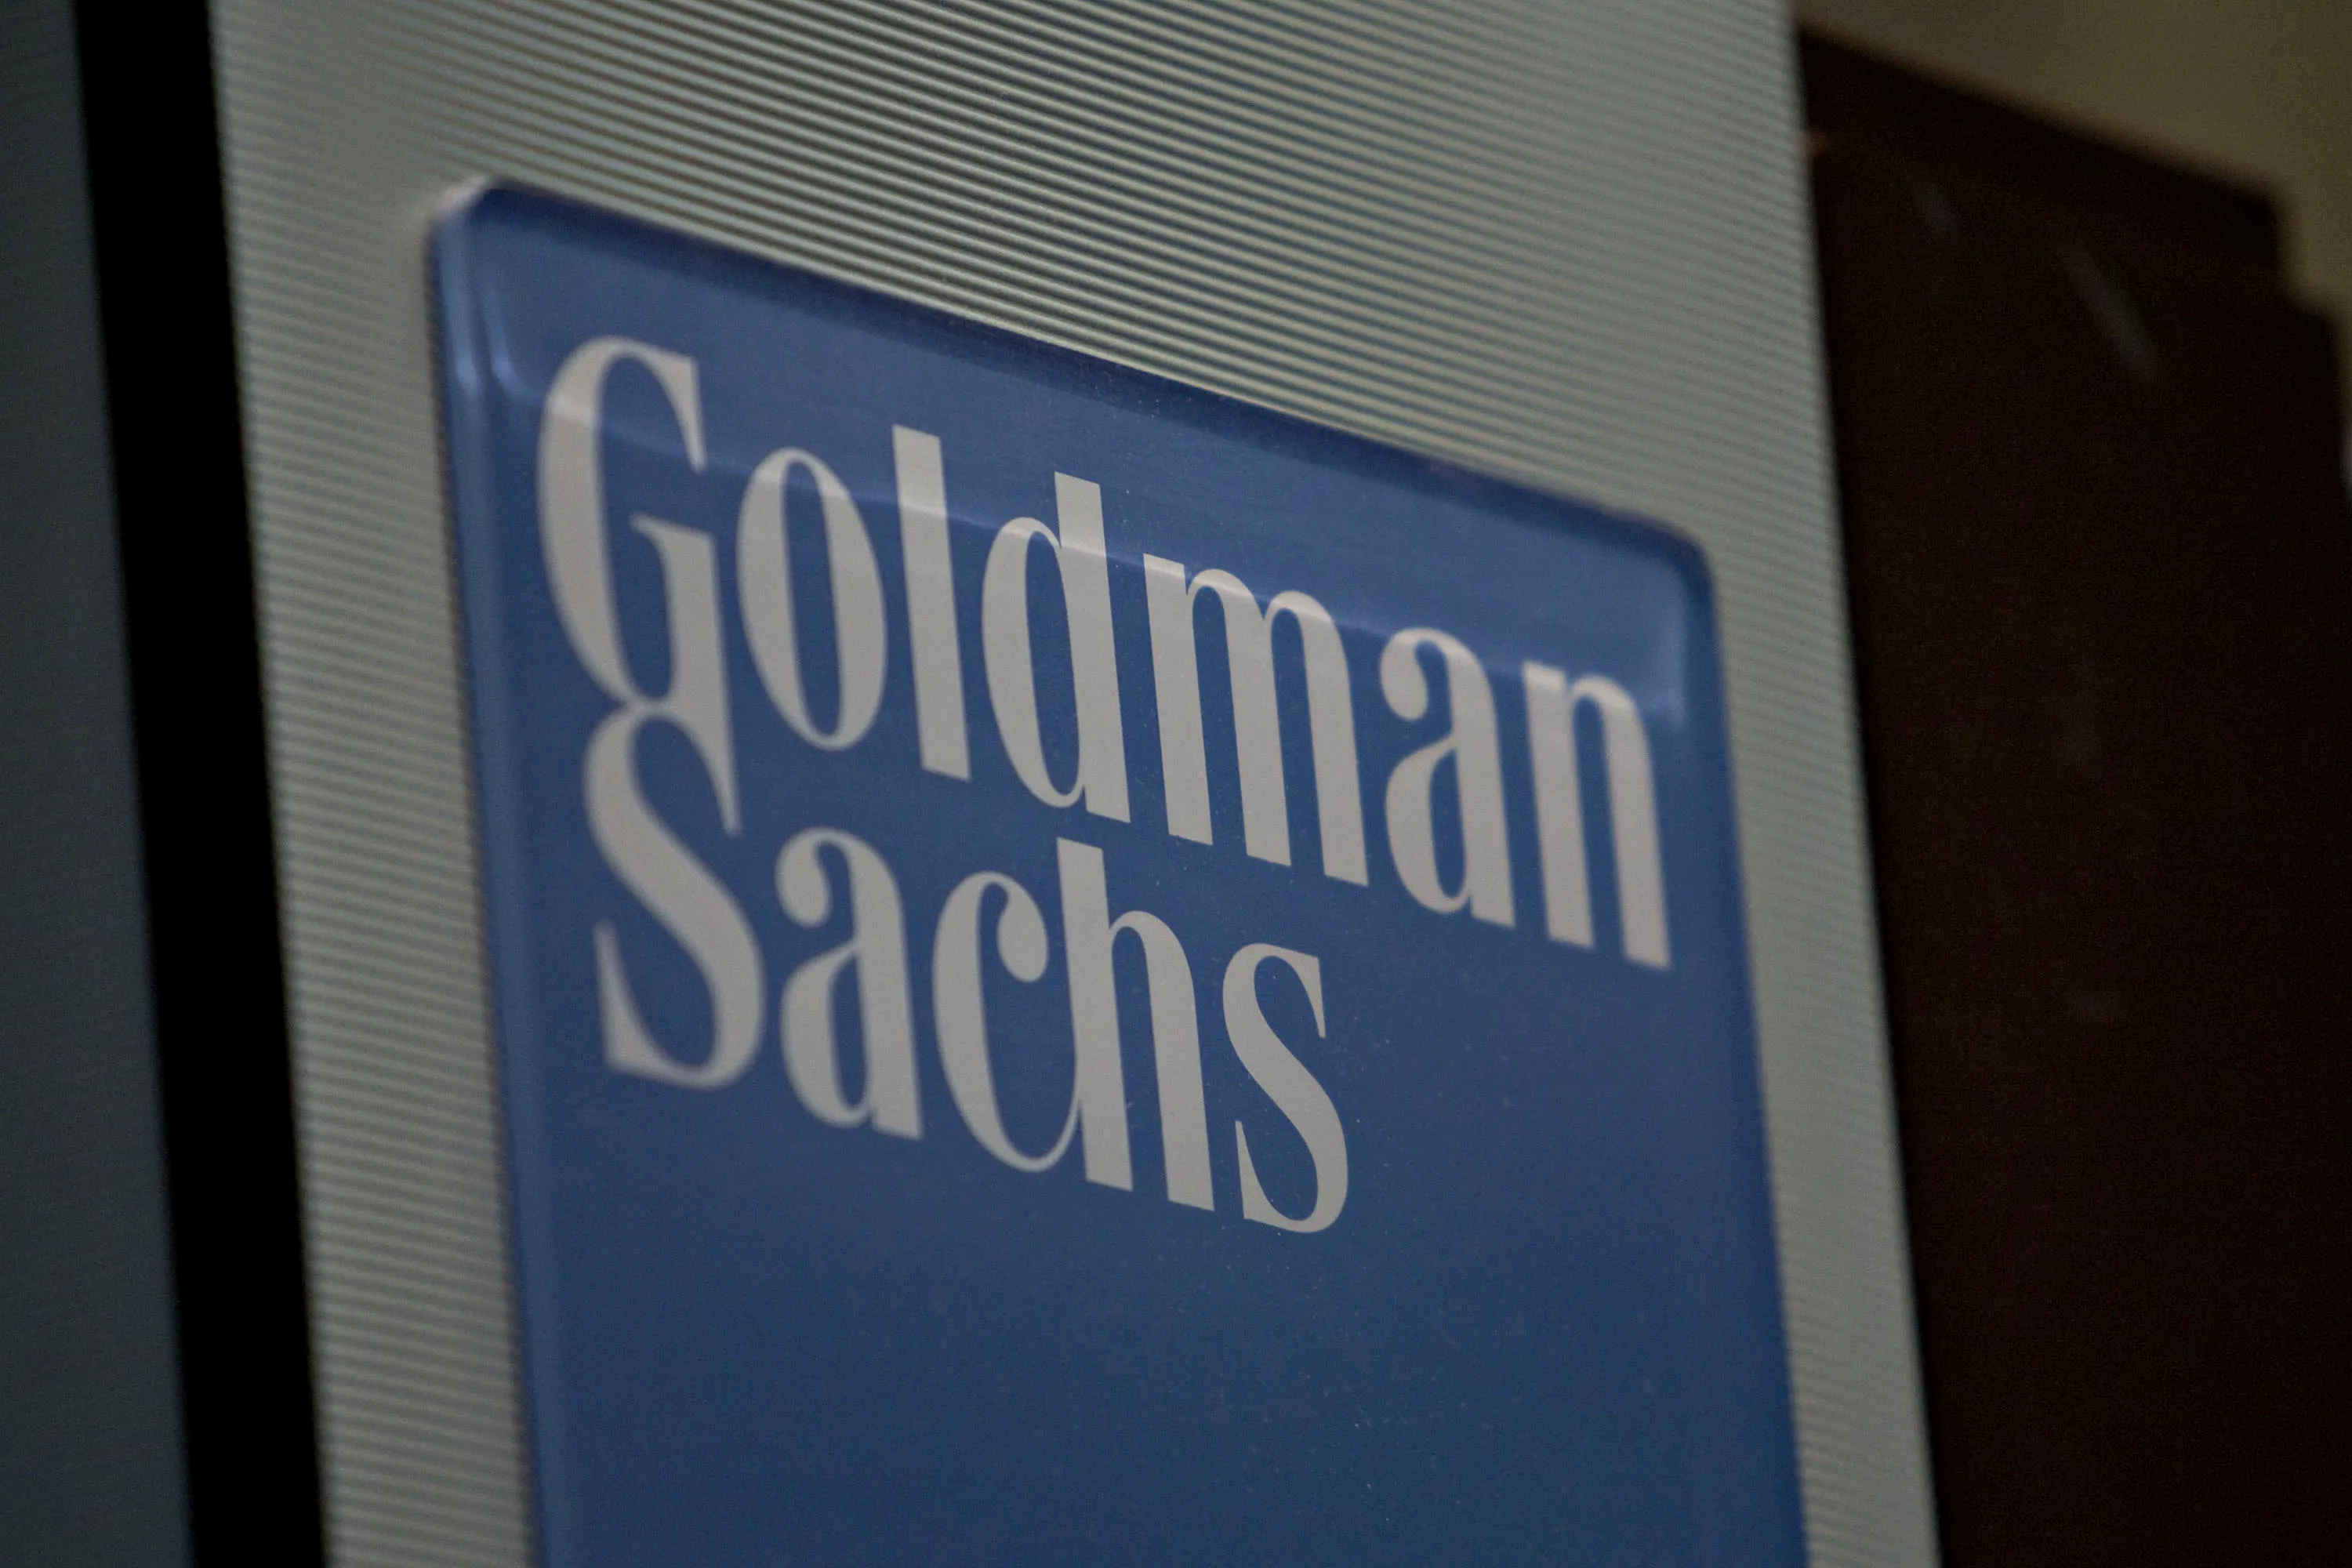 Goldman Sachs Targets People in Credit Debt | Money